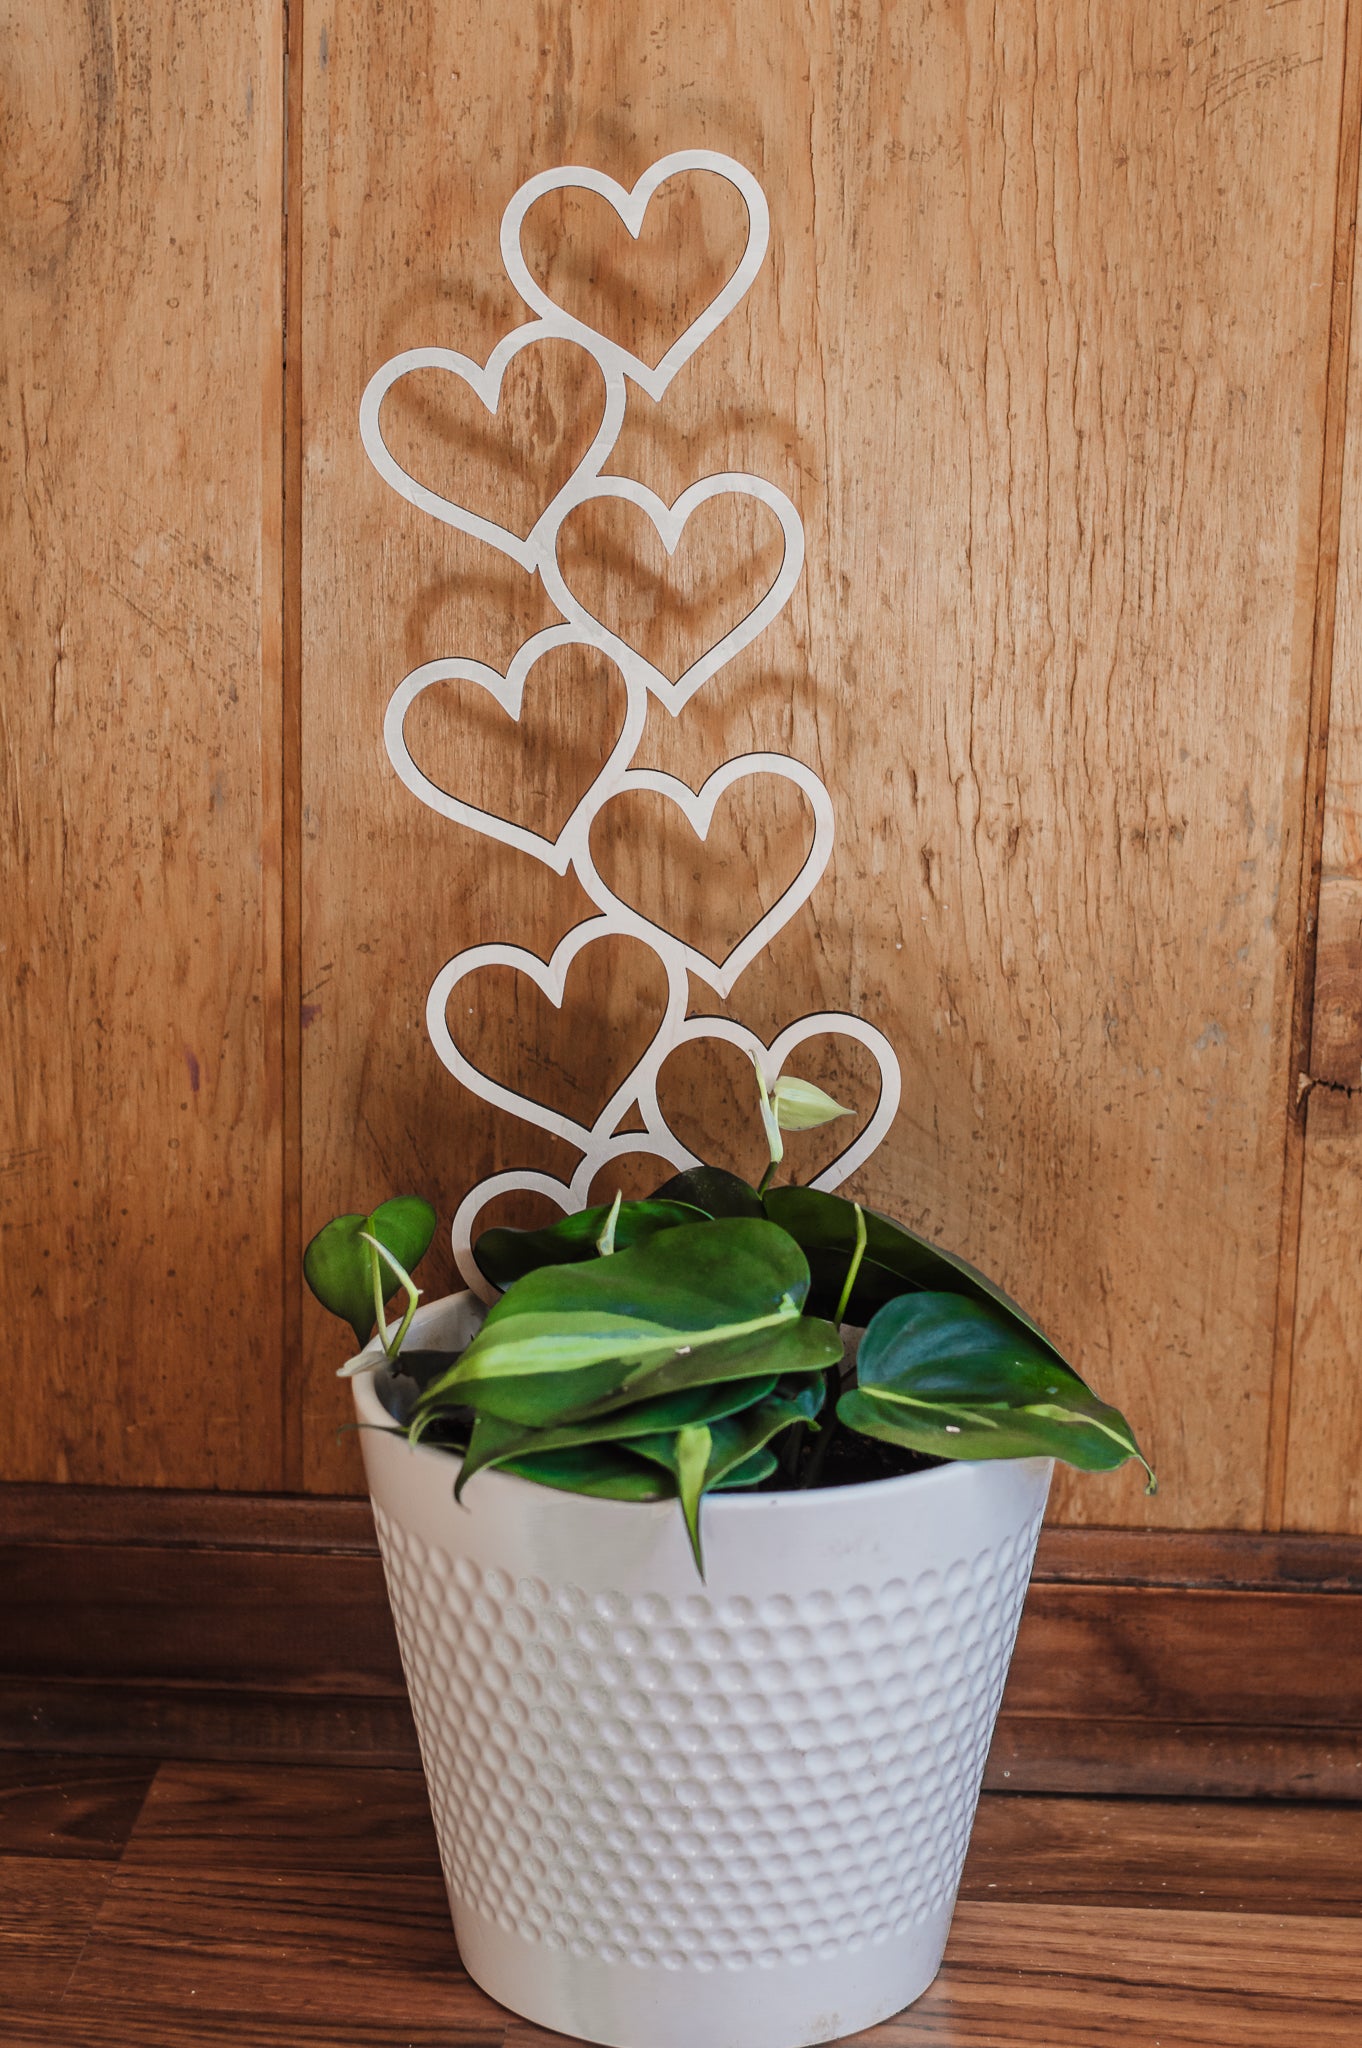 Wooden Indoor Plant Heart Trellis inside a white planter